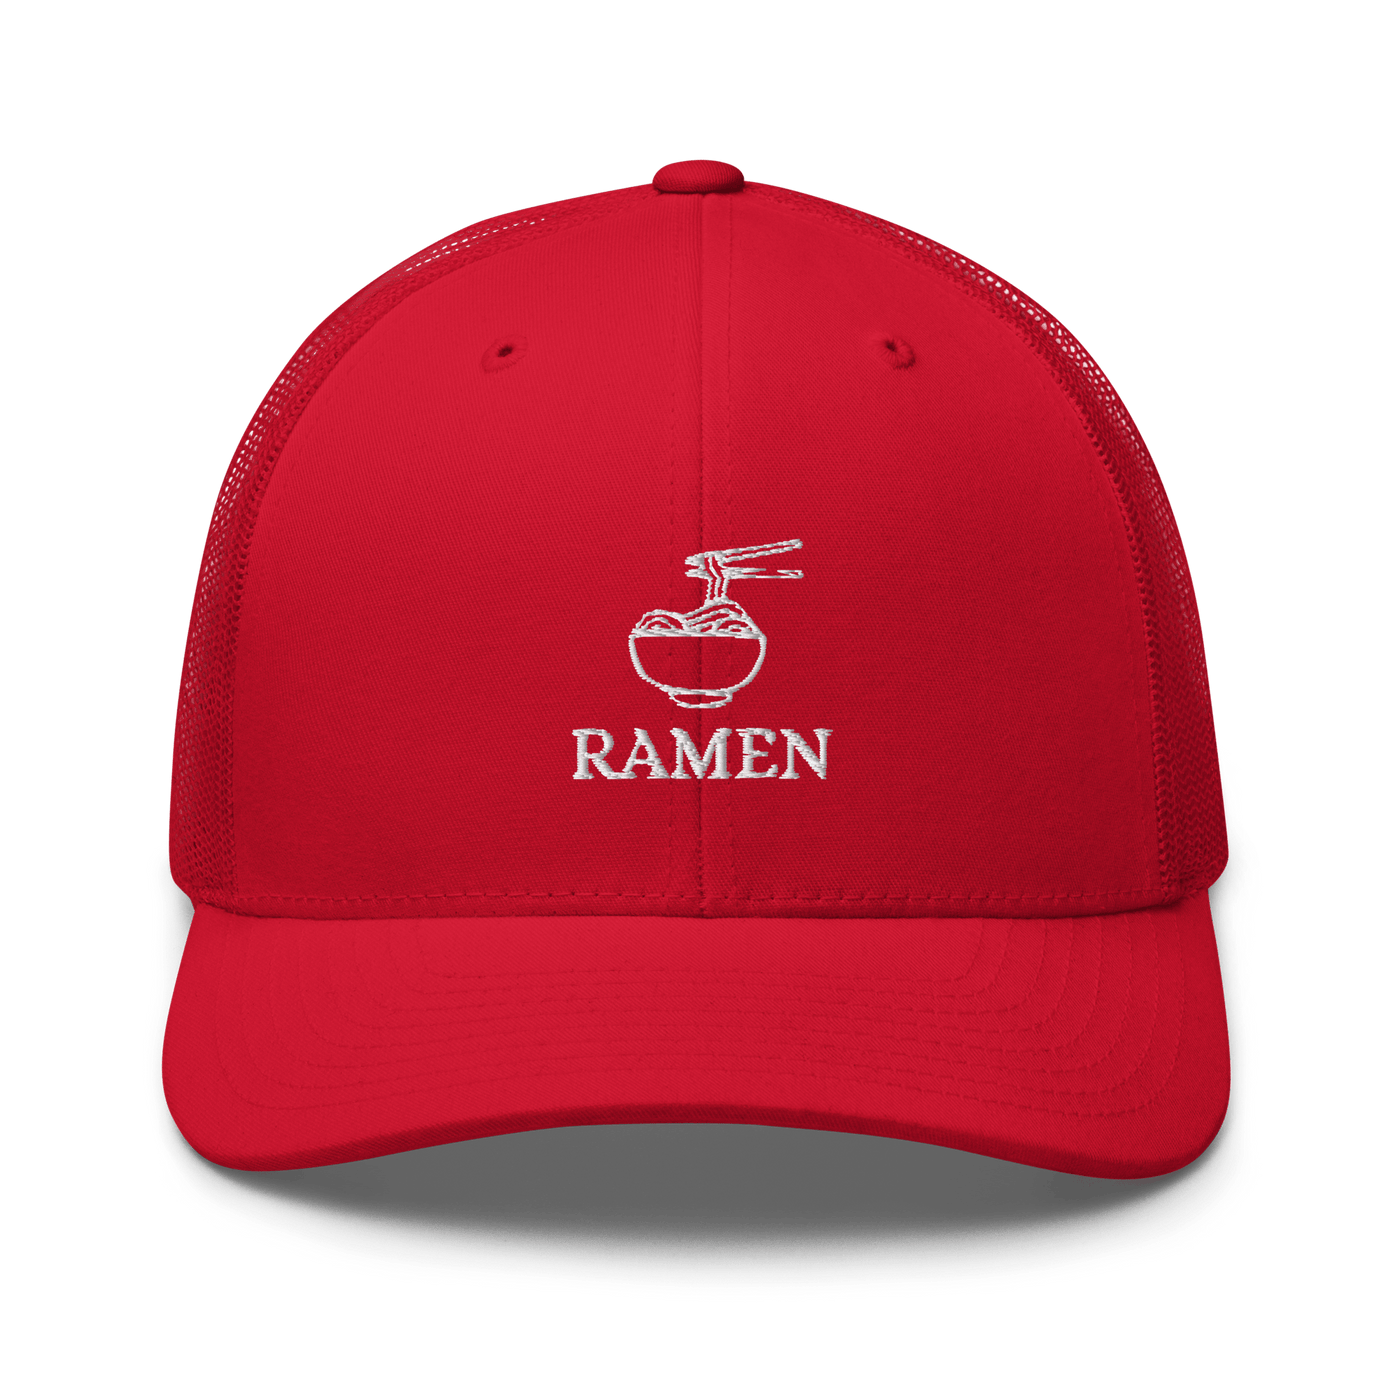 Ramen Bowl Trucker Cap - Red - - Just Another Cap Store